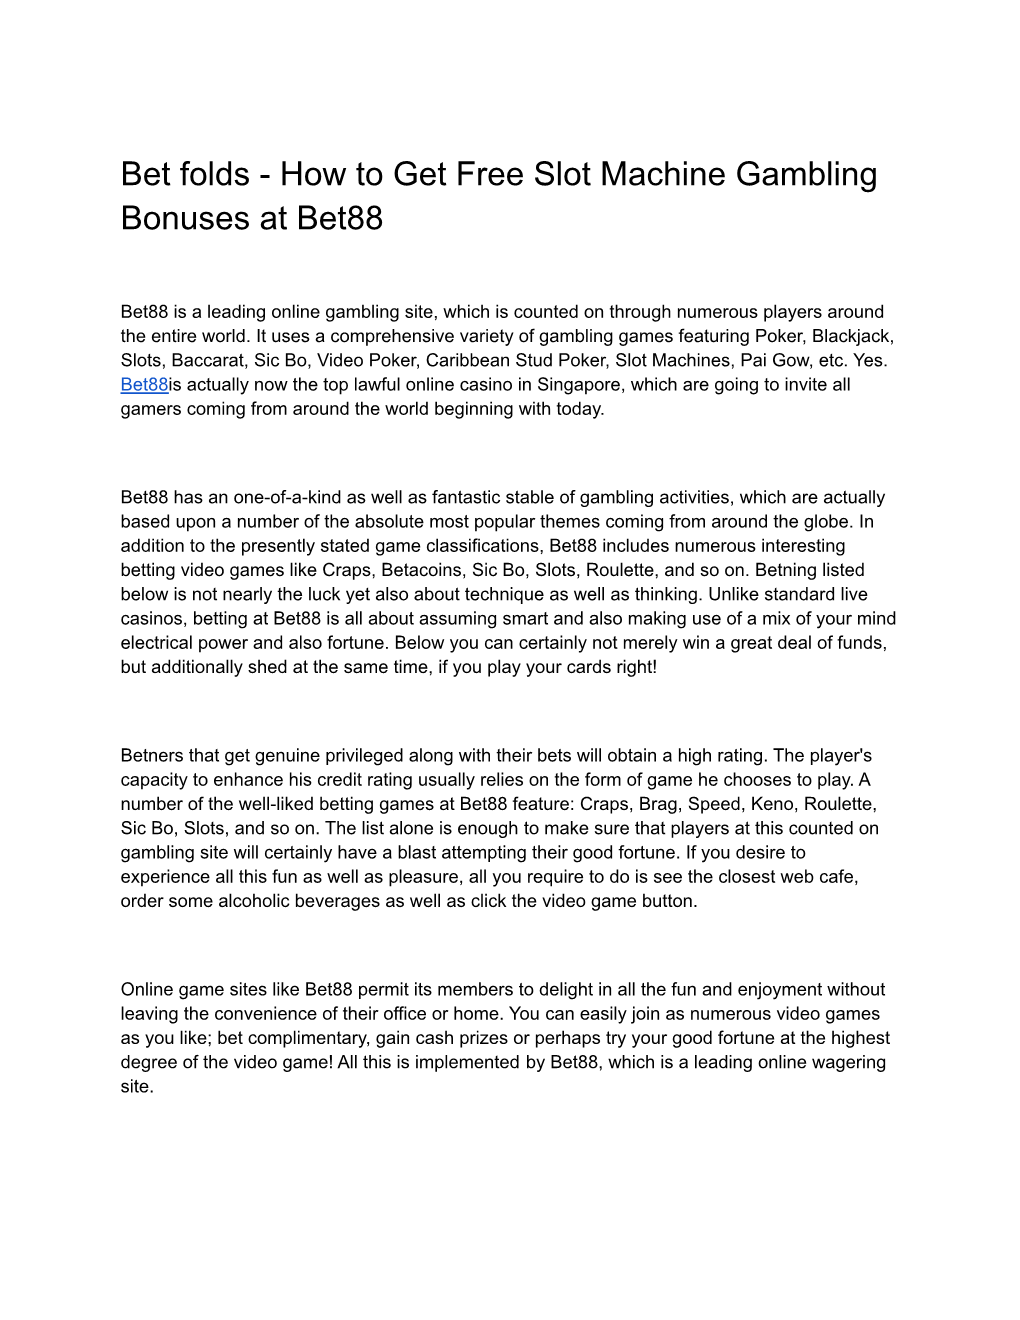 Bet Folds - How to Get Free Slot Machine Gambling Bonuses at Bet88